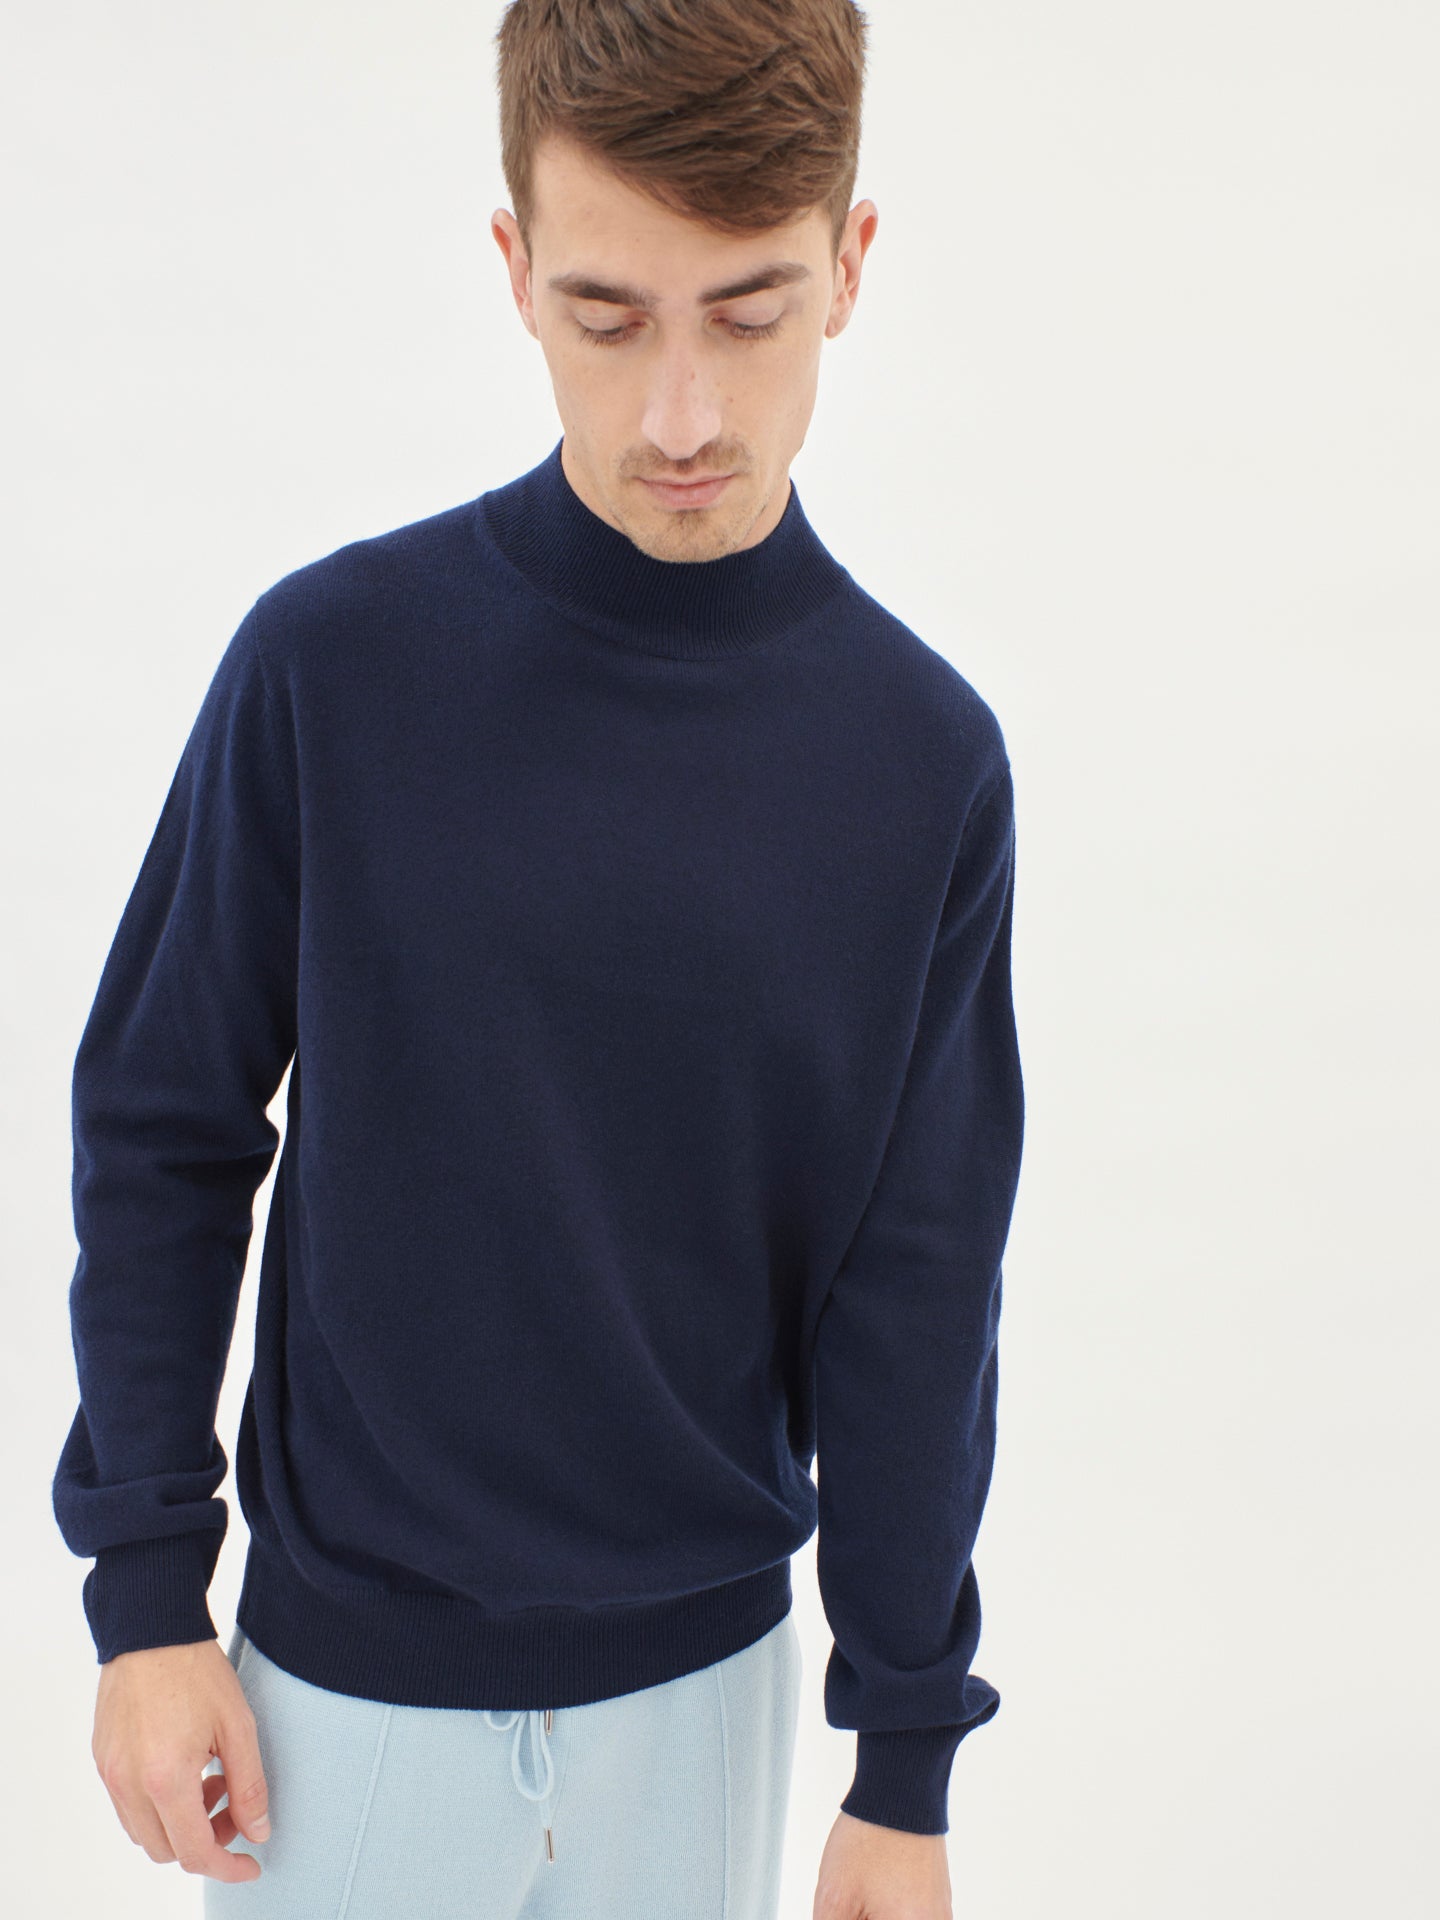 Men's Cashmere Mock Neck Sweater Navy - Gobi Cashmere